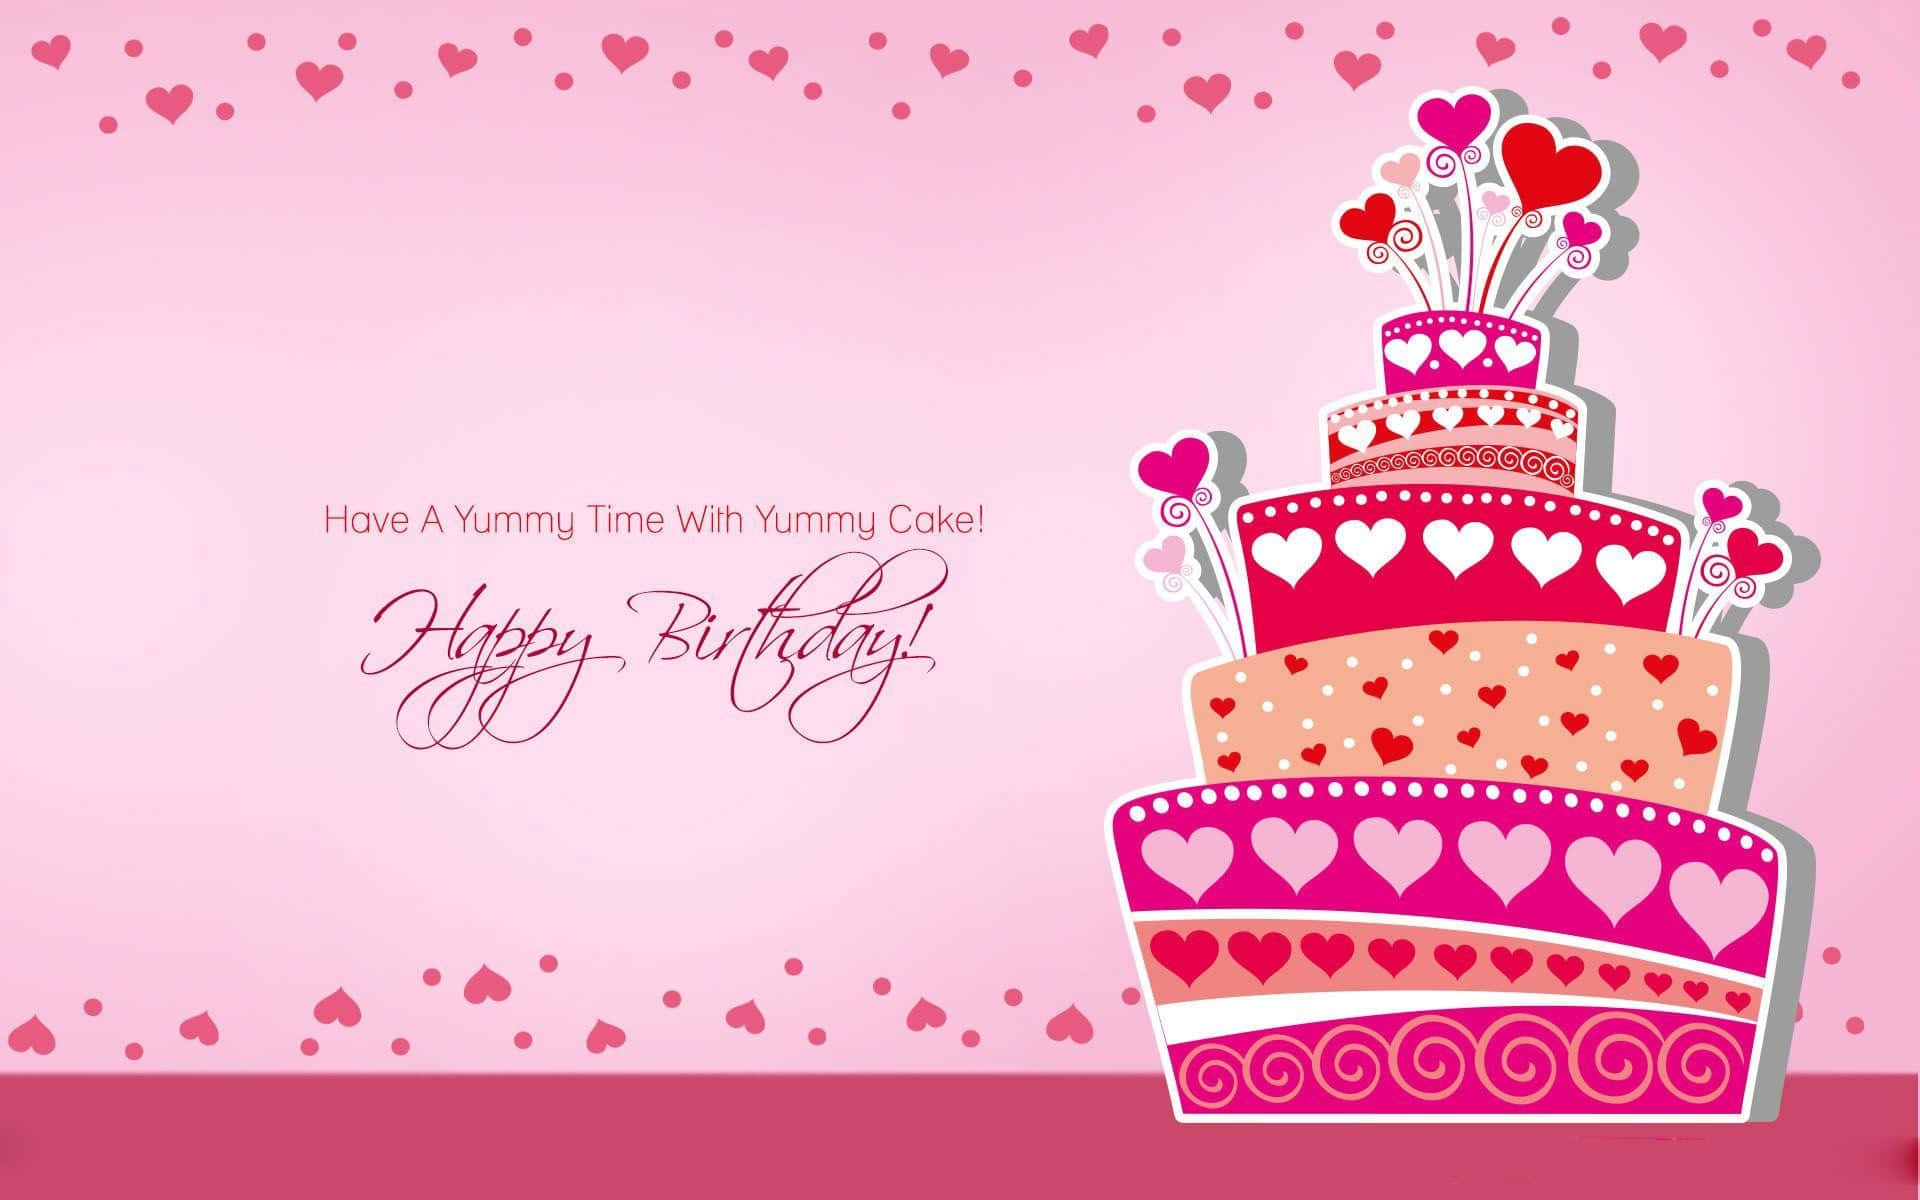 Happy birthday to Pinki..💛💛 - Rad's Cake & cakes | Facebook